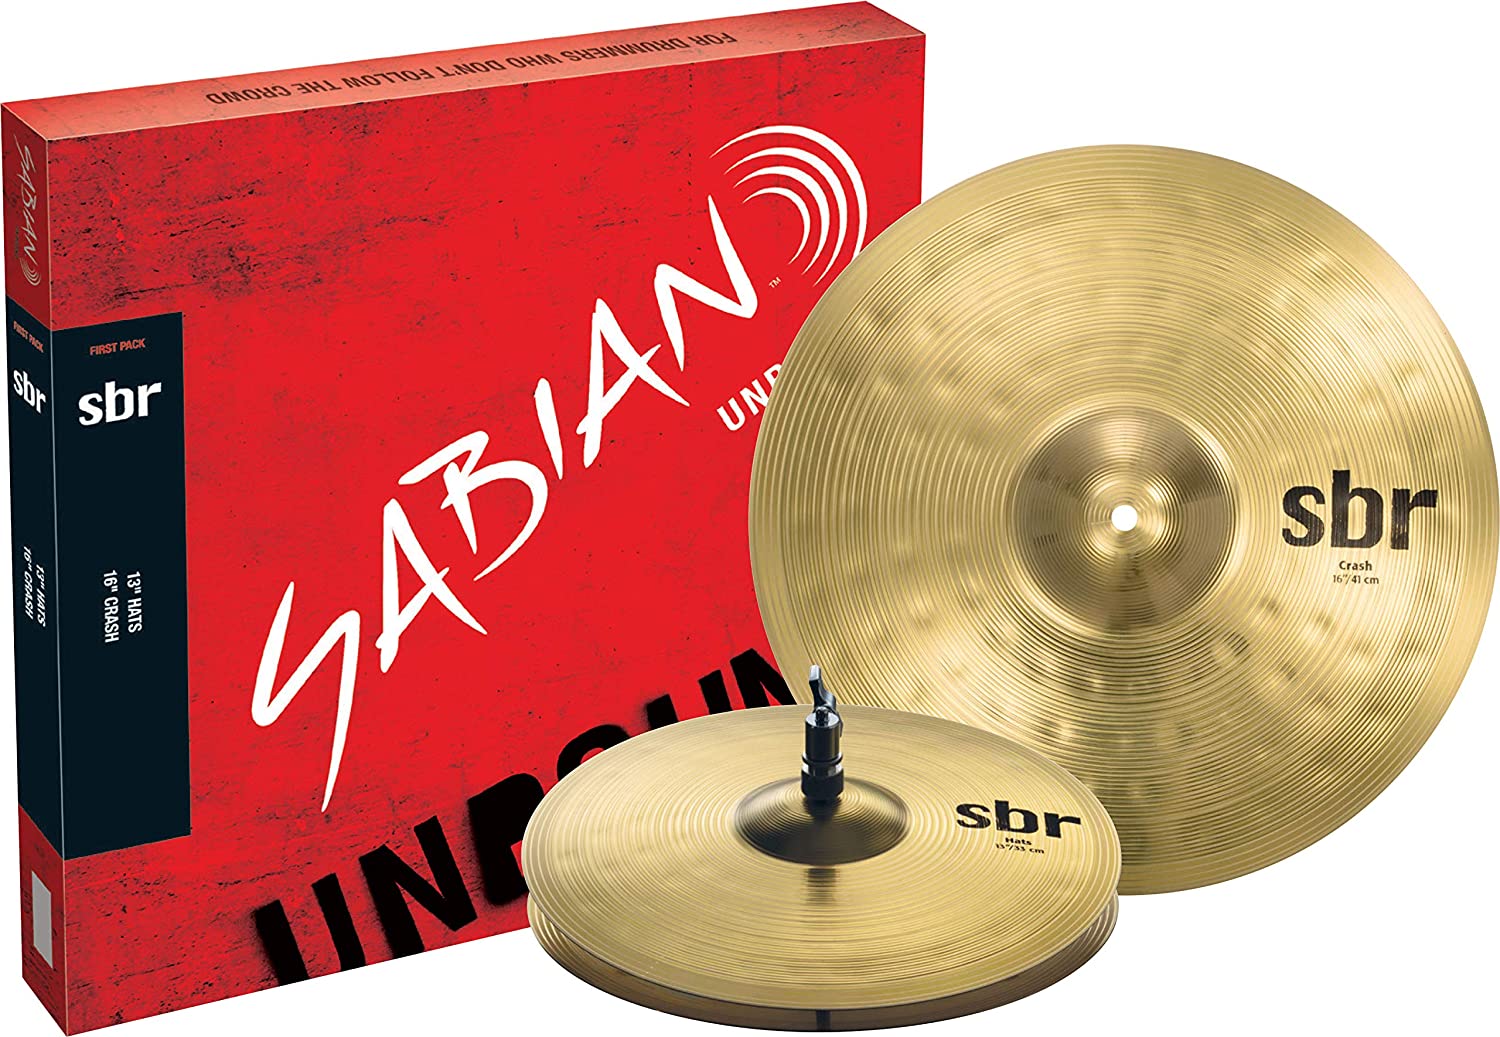 Sabian SBR Cymbals First Pack